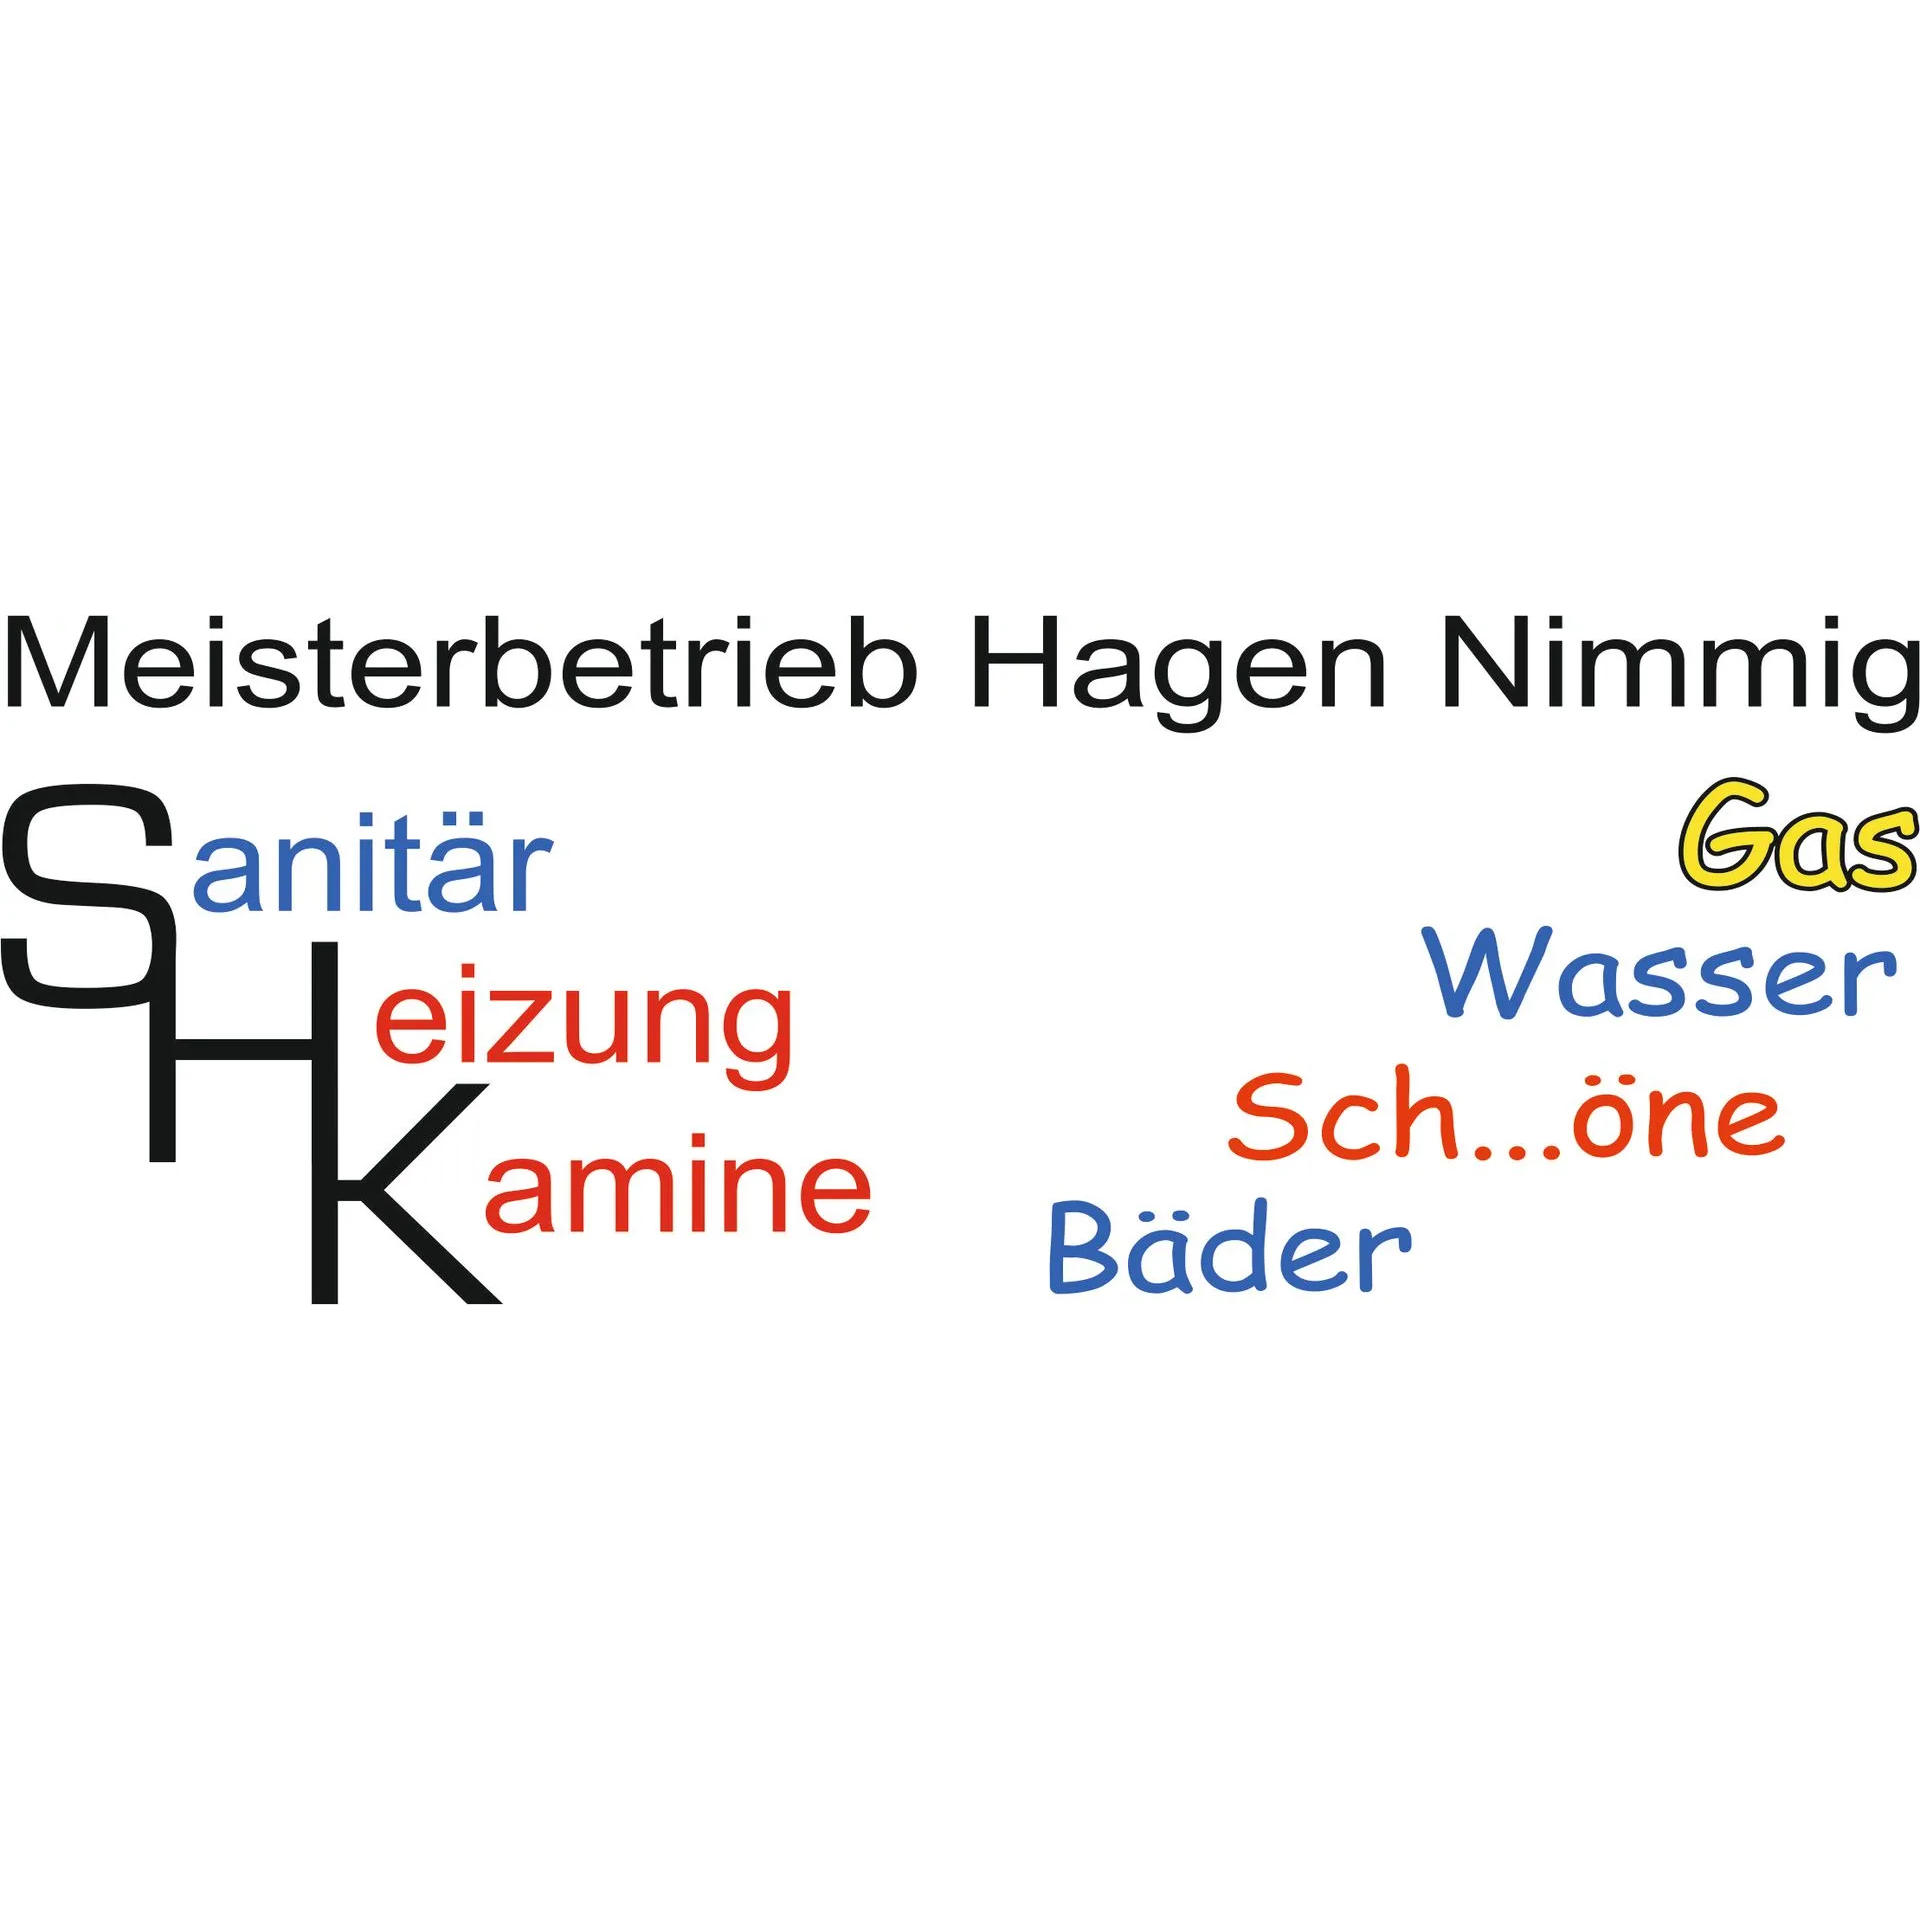 Nimmig Hagen Meisterbetrieb Sanitär, Heizung, Kamine, Kälte, Klima Logo